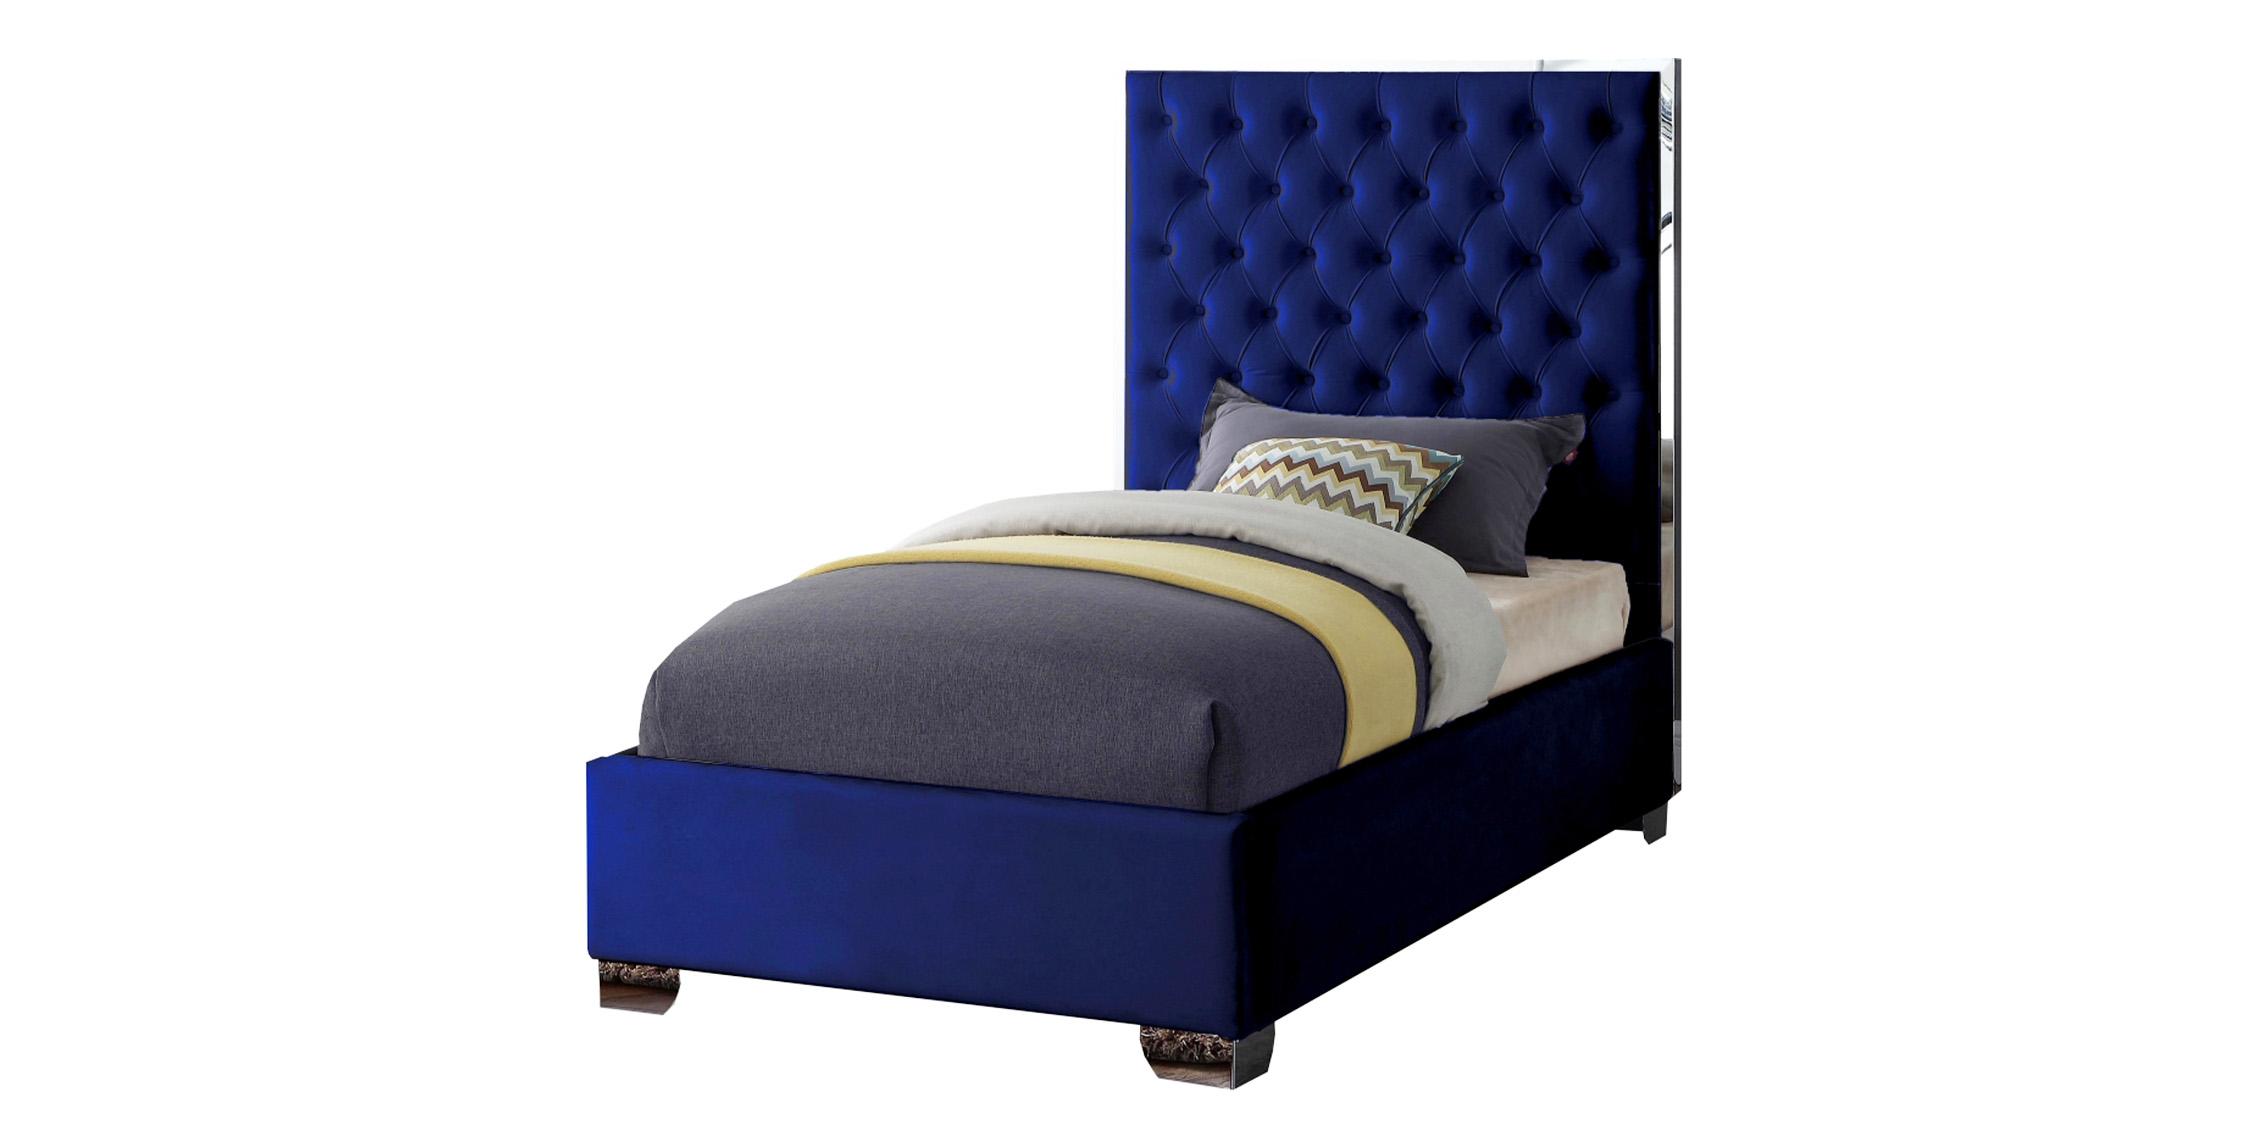 

    
Meridian Furniture LexiNavy-T Platform Bed Navy blue LexiNavy-T
